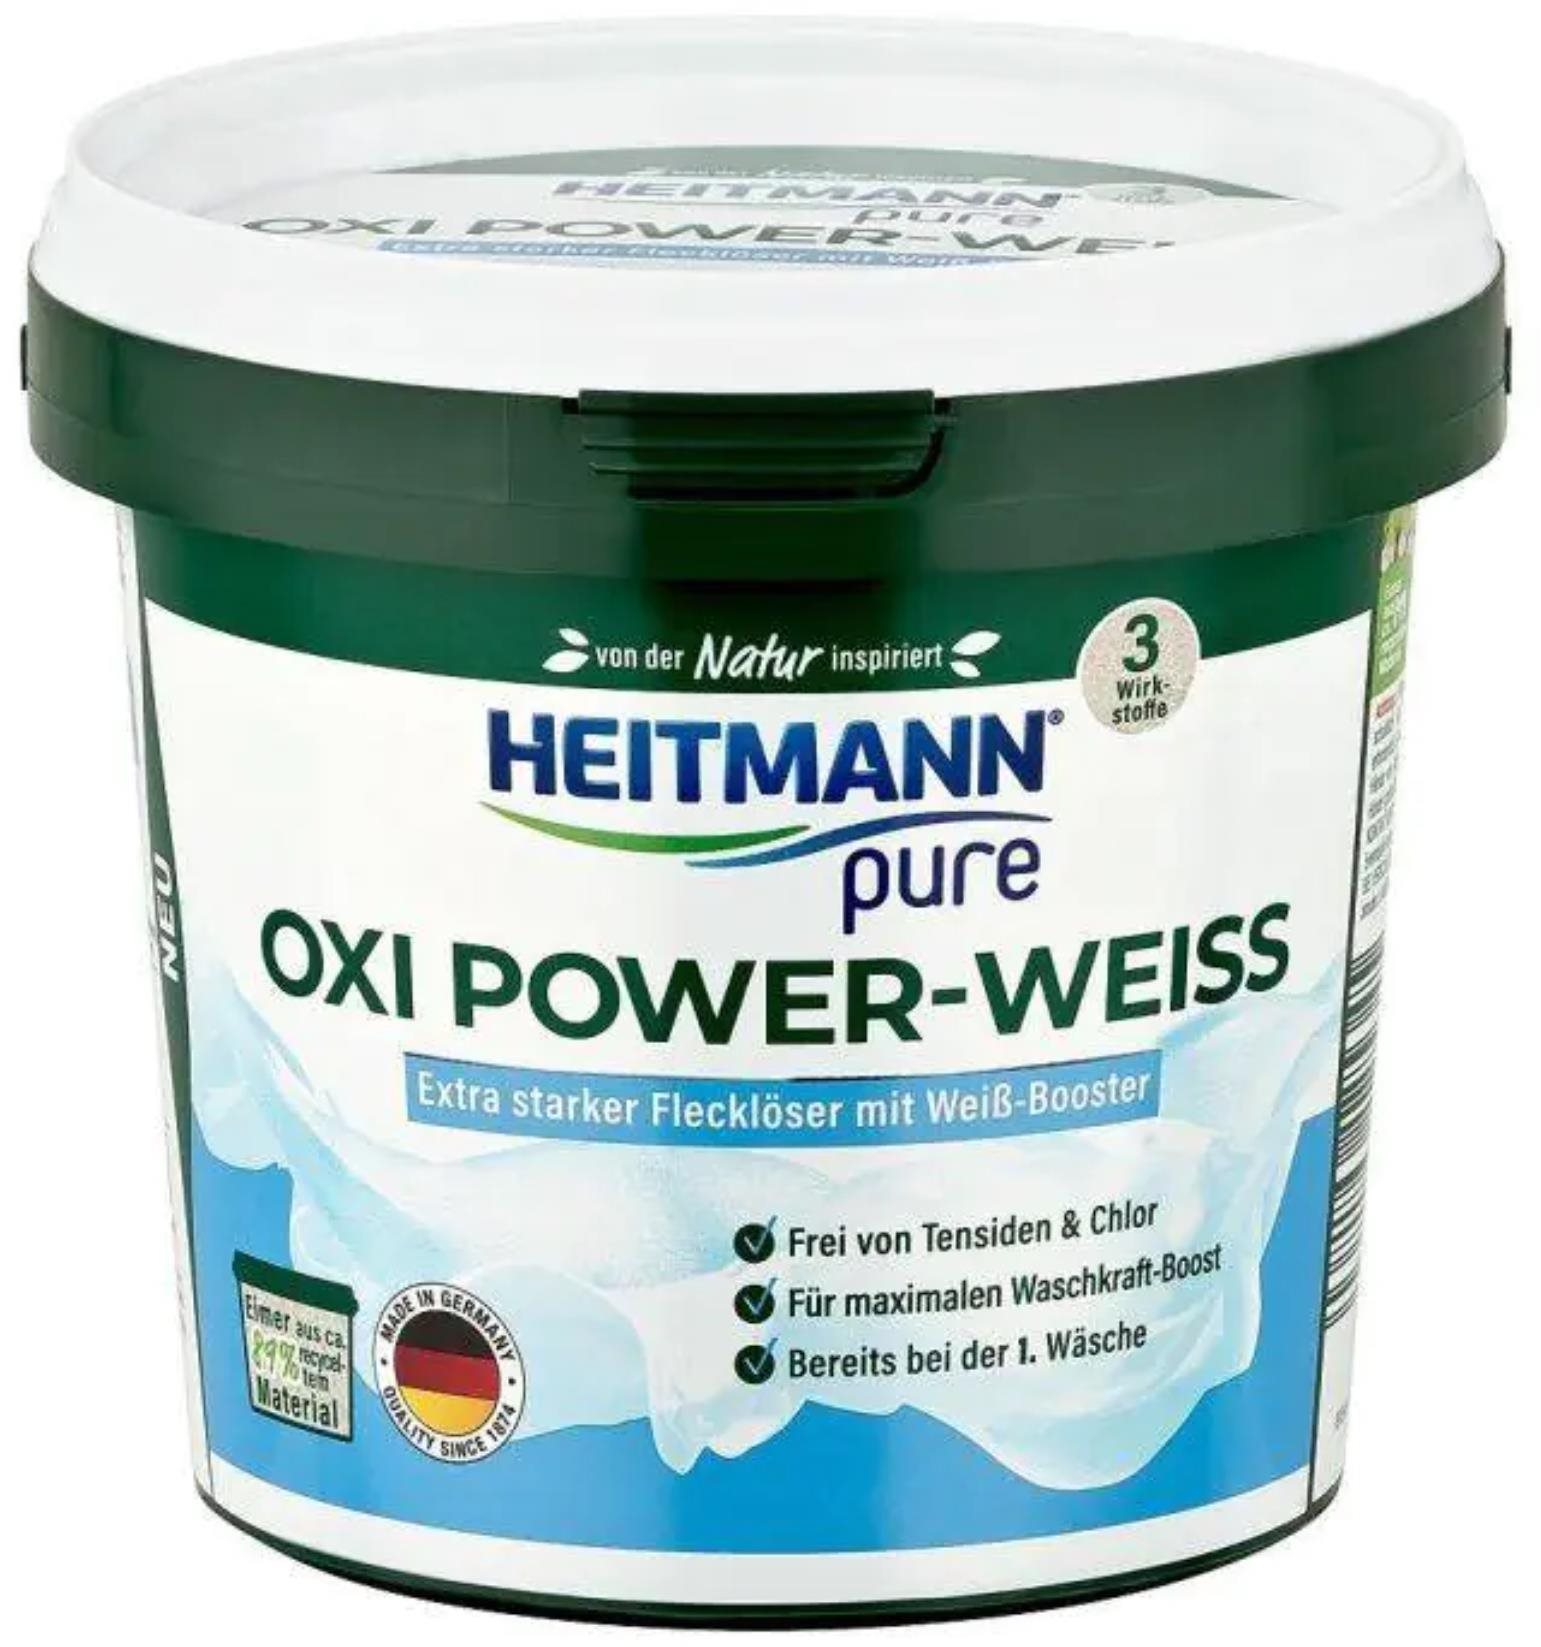 Folttisztító HEITMANN Oxi Power White 500 g